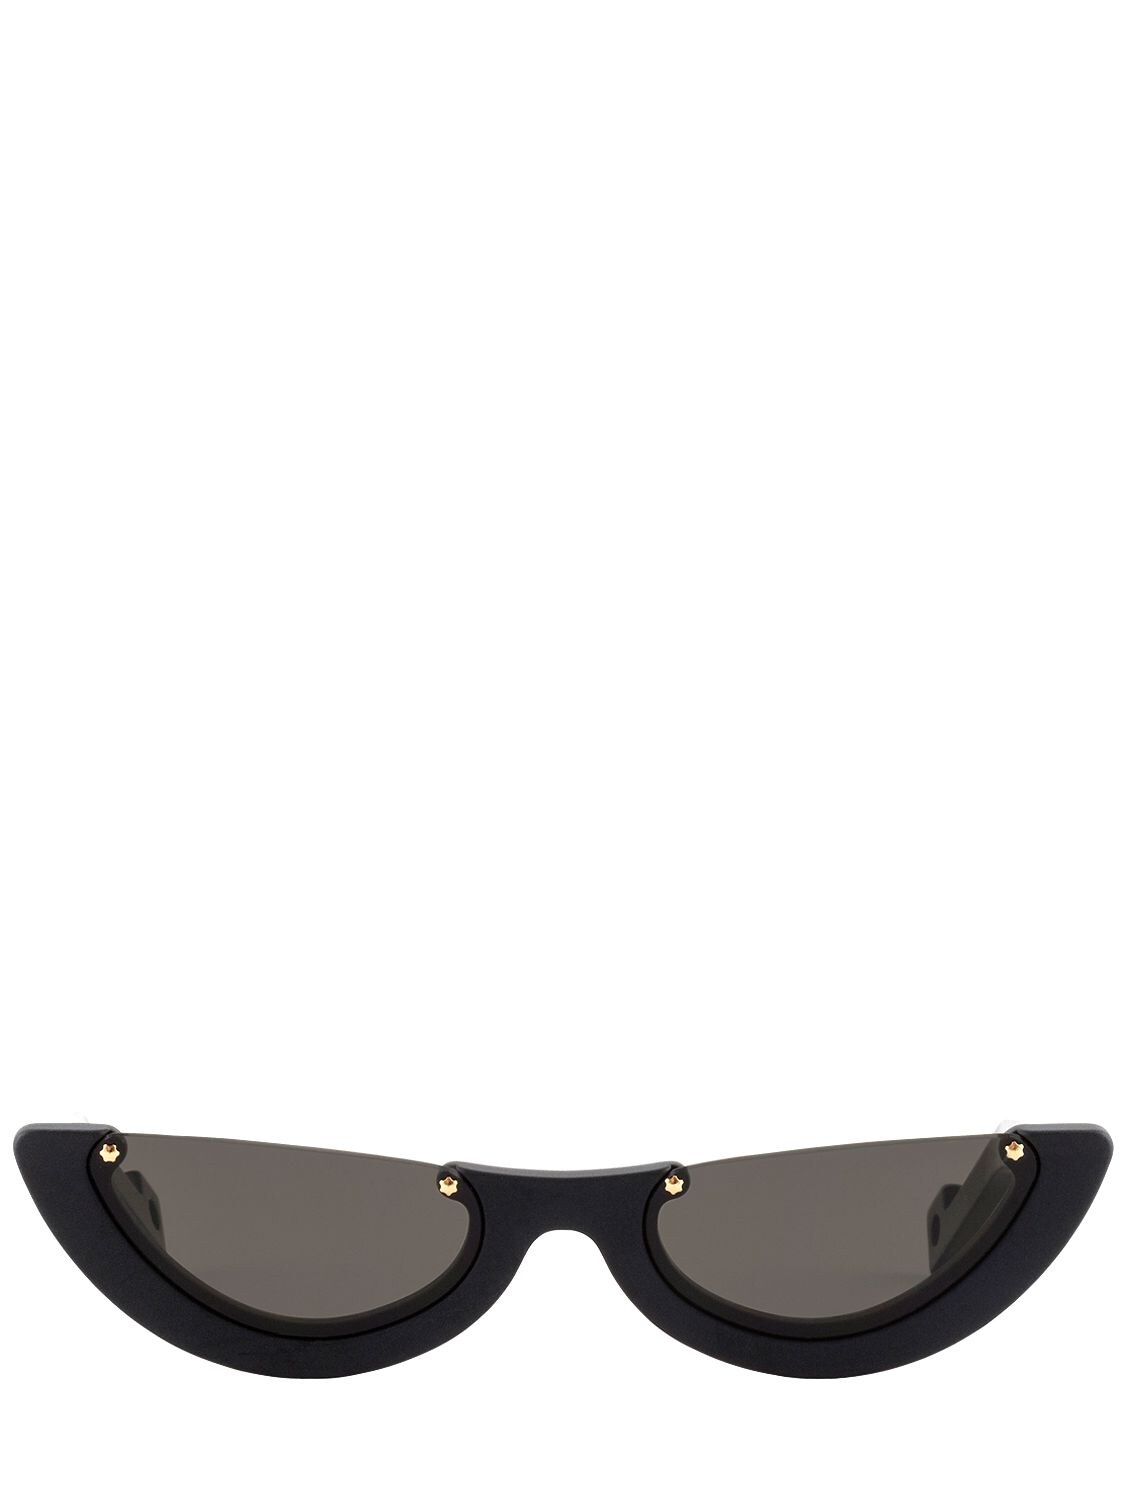 Pawaka Empat 4 Matte Black Sunglasses